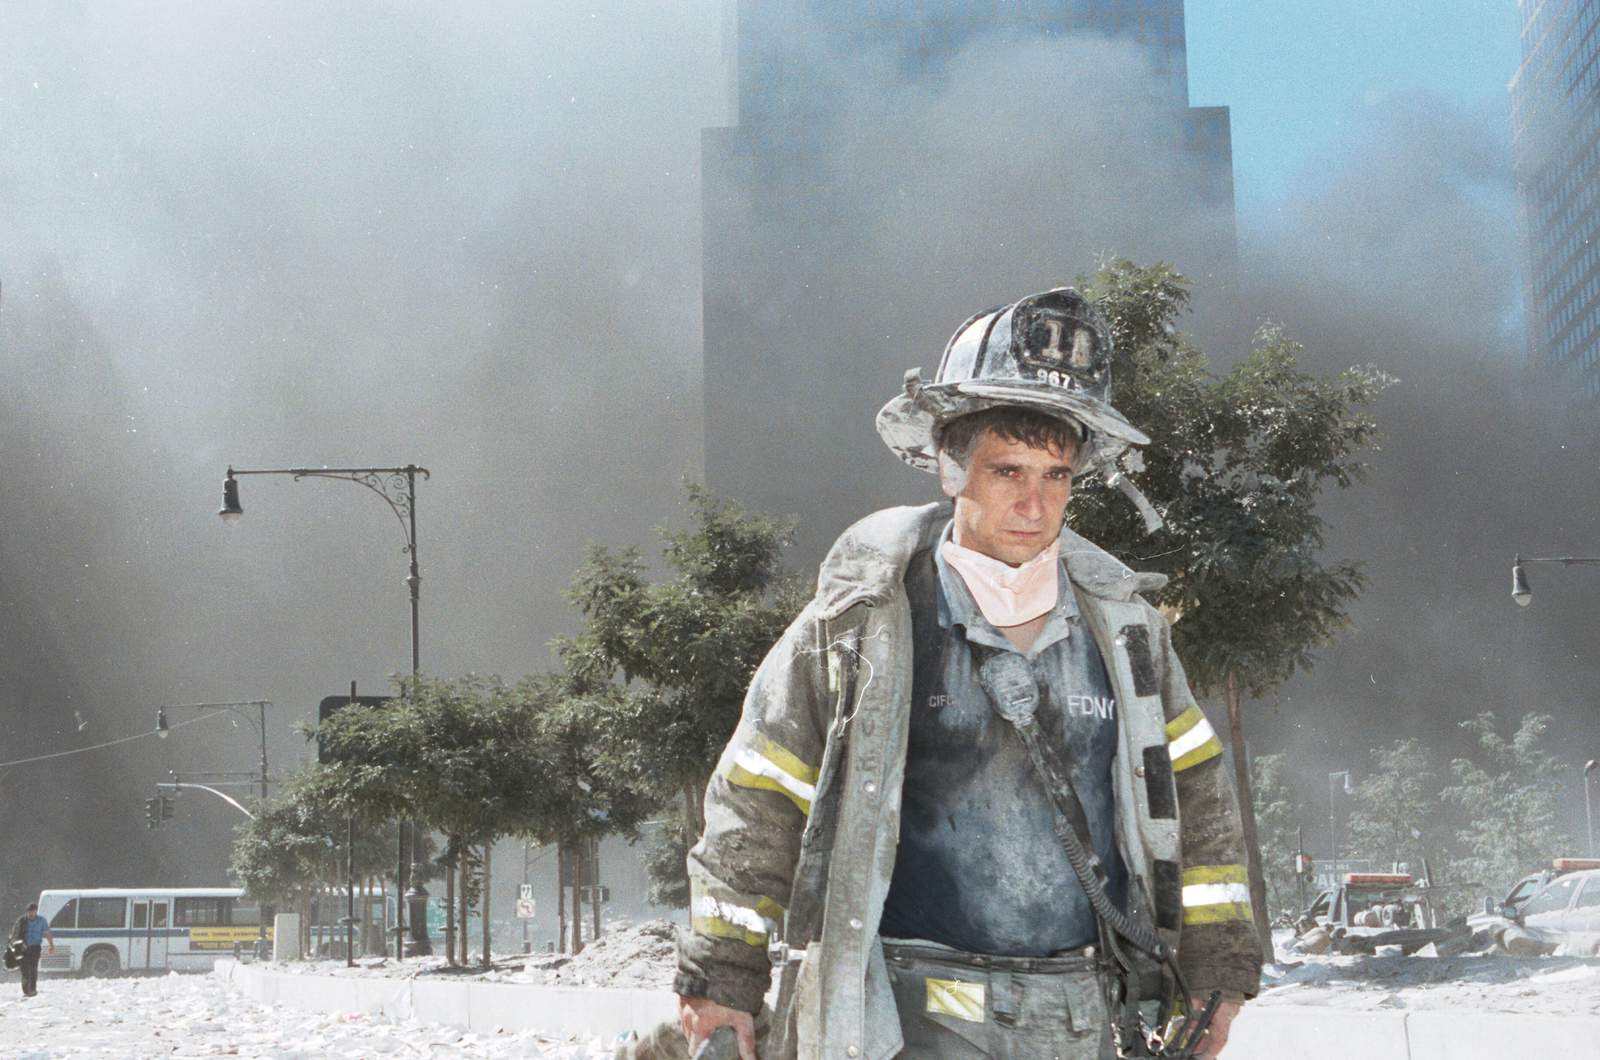 todays marks anniversary 9/11 attack